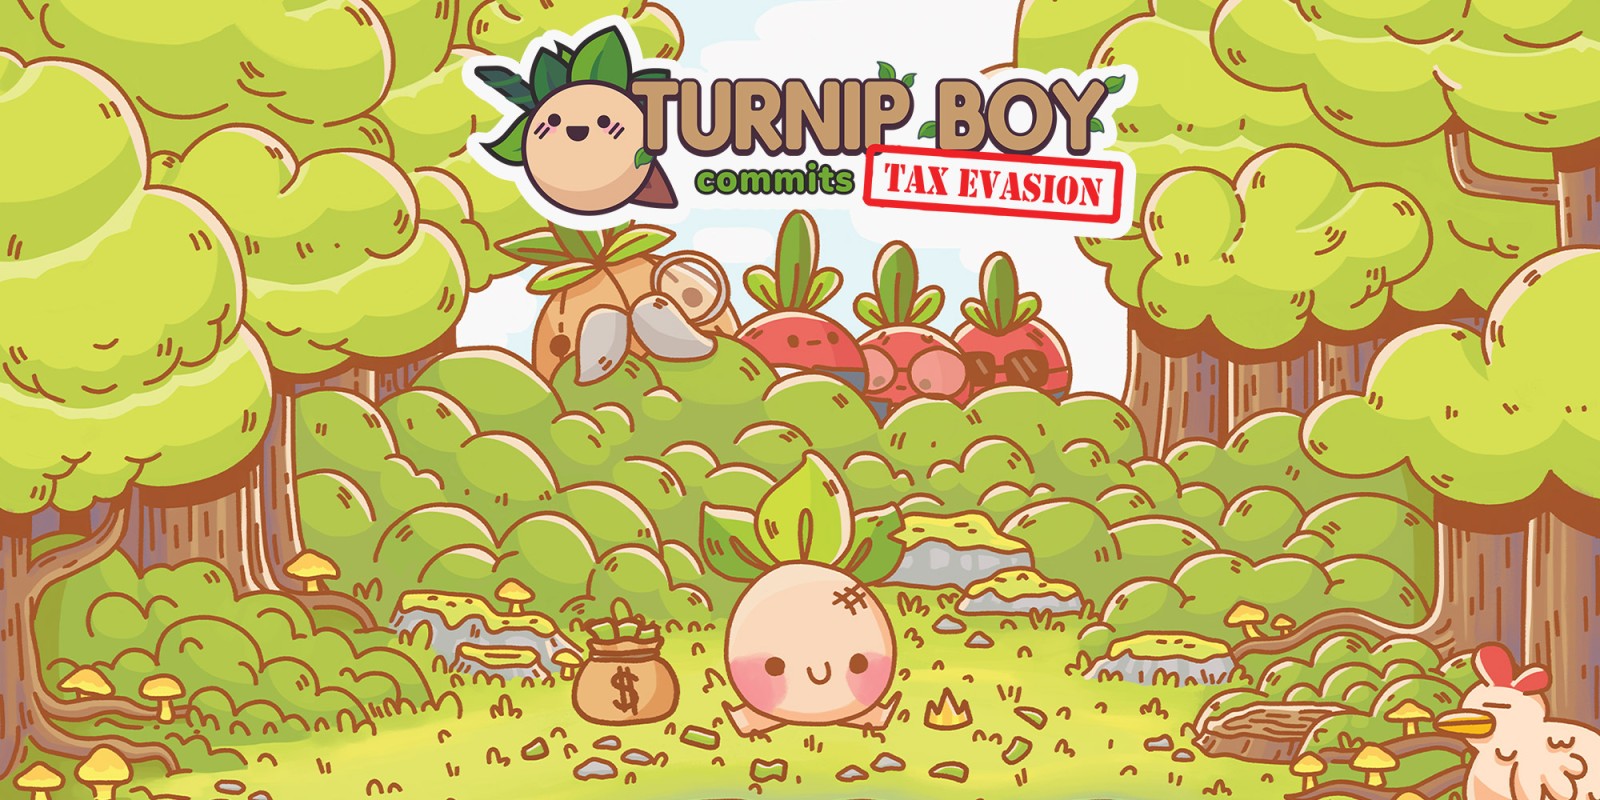 turnip boy commits tax evasion price